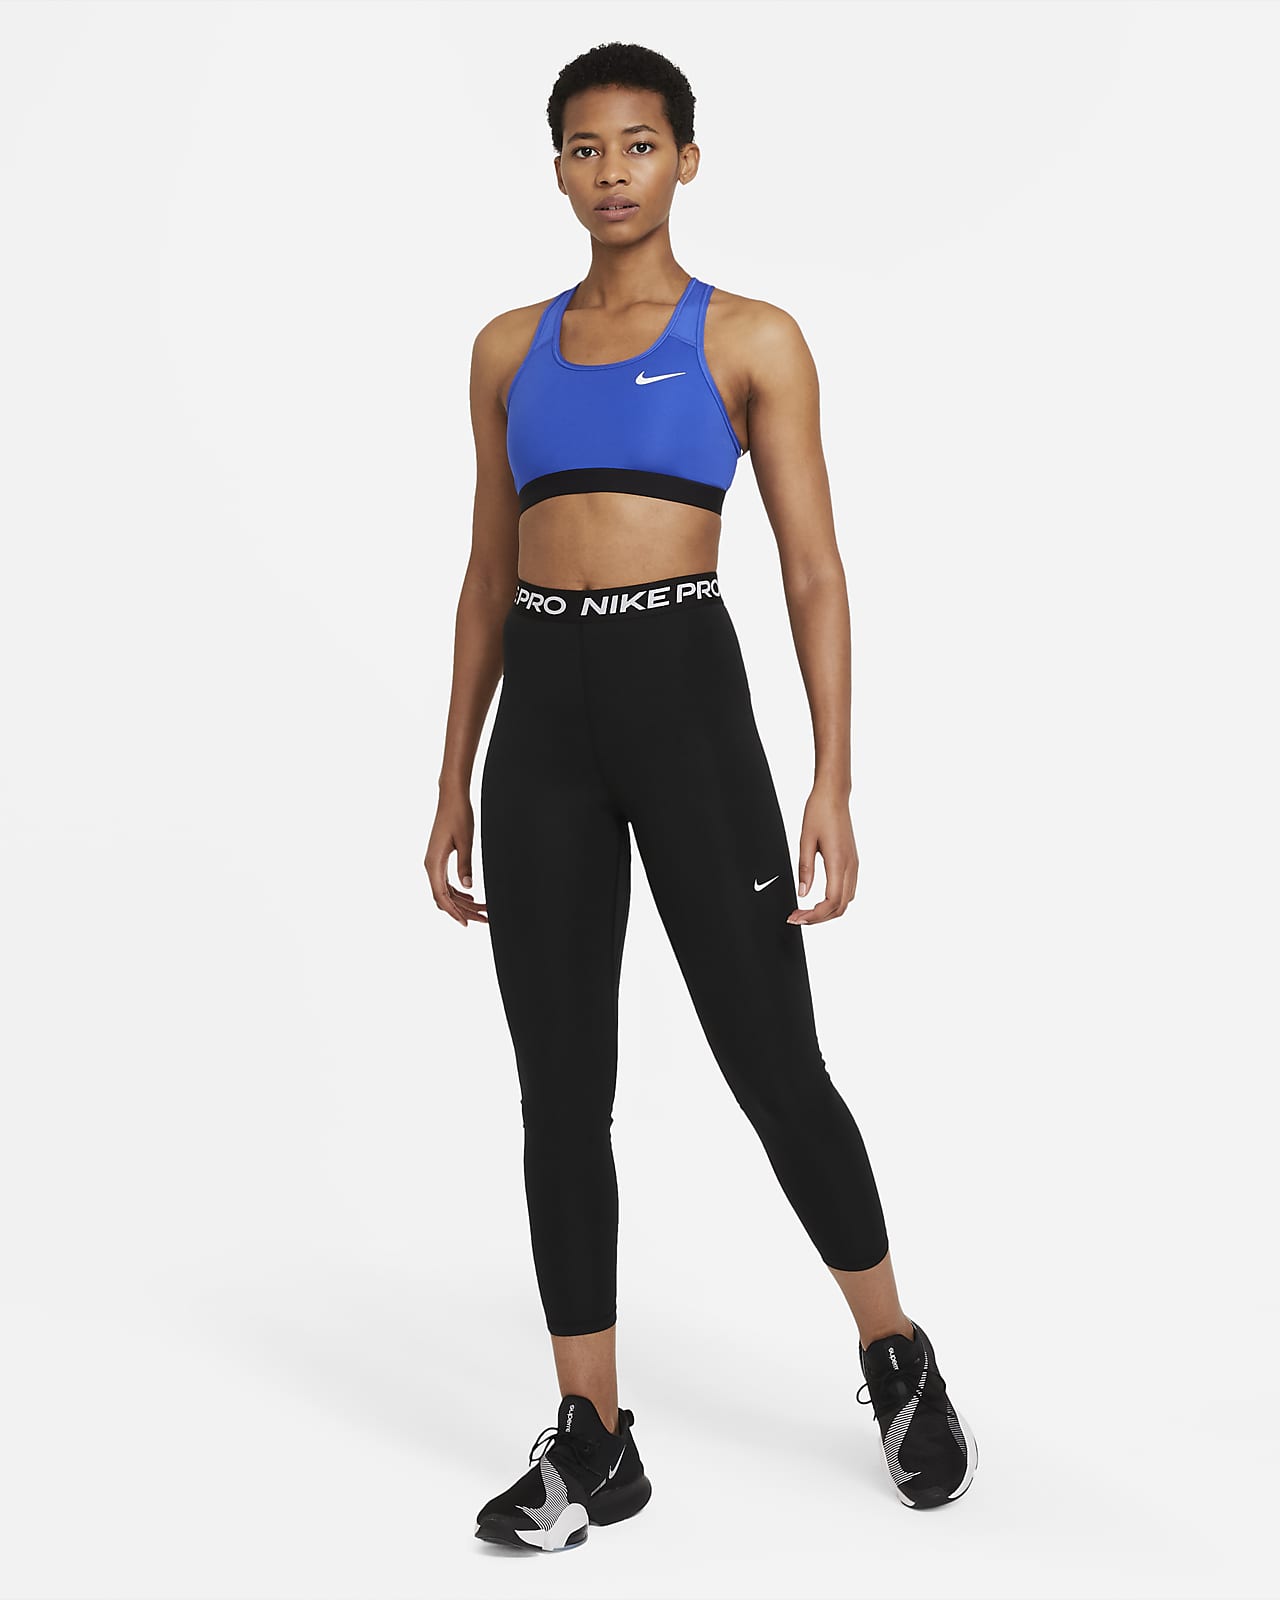 Nike Pro Legginsy Damskie Na Fitness Crossfit - Ceny i opinie 